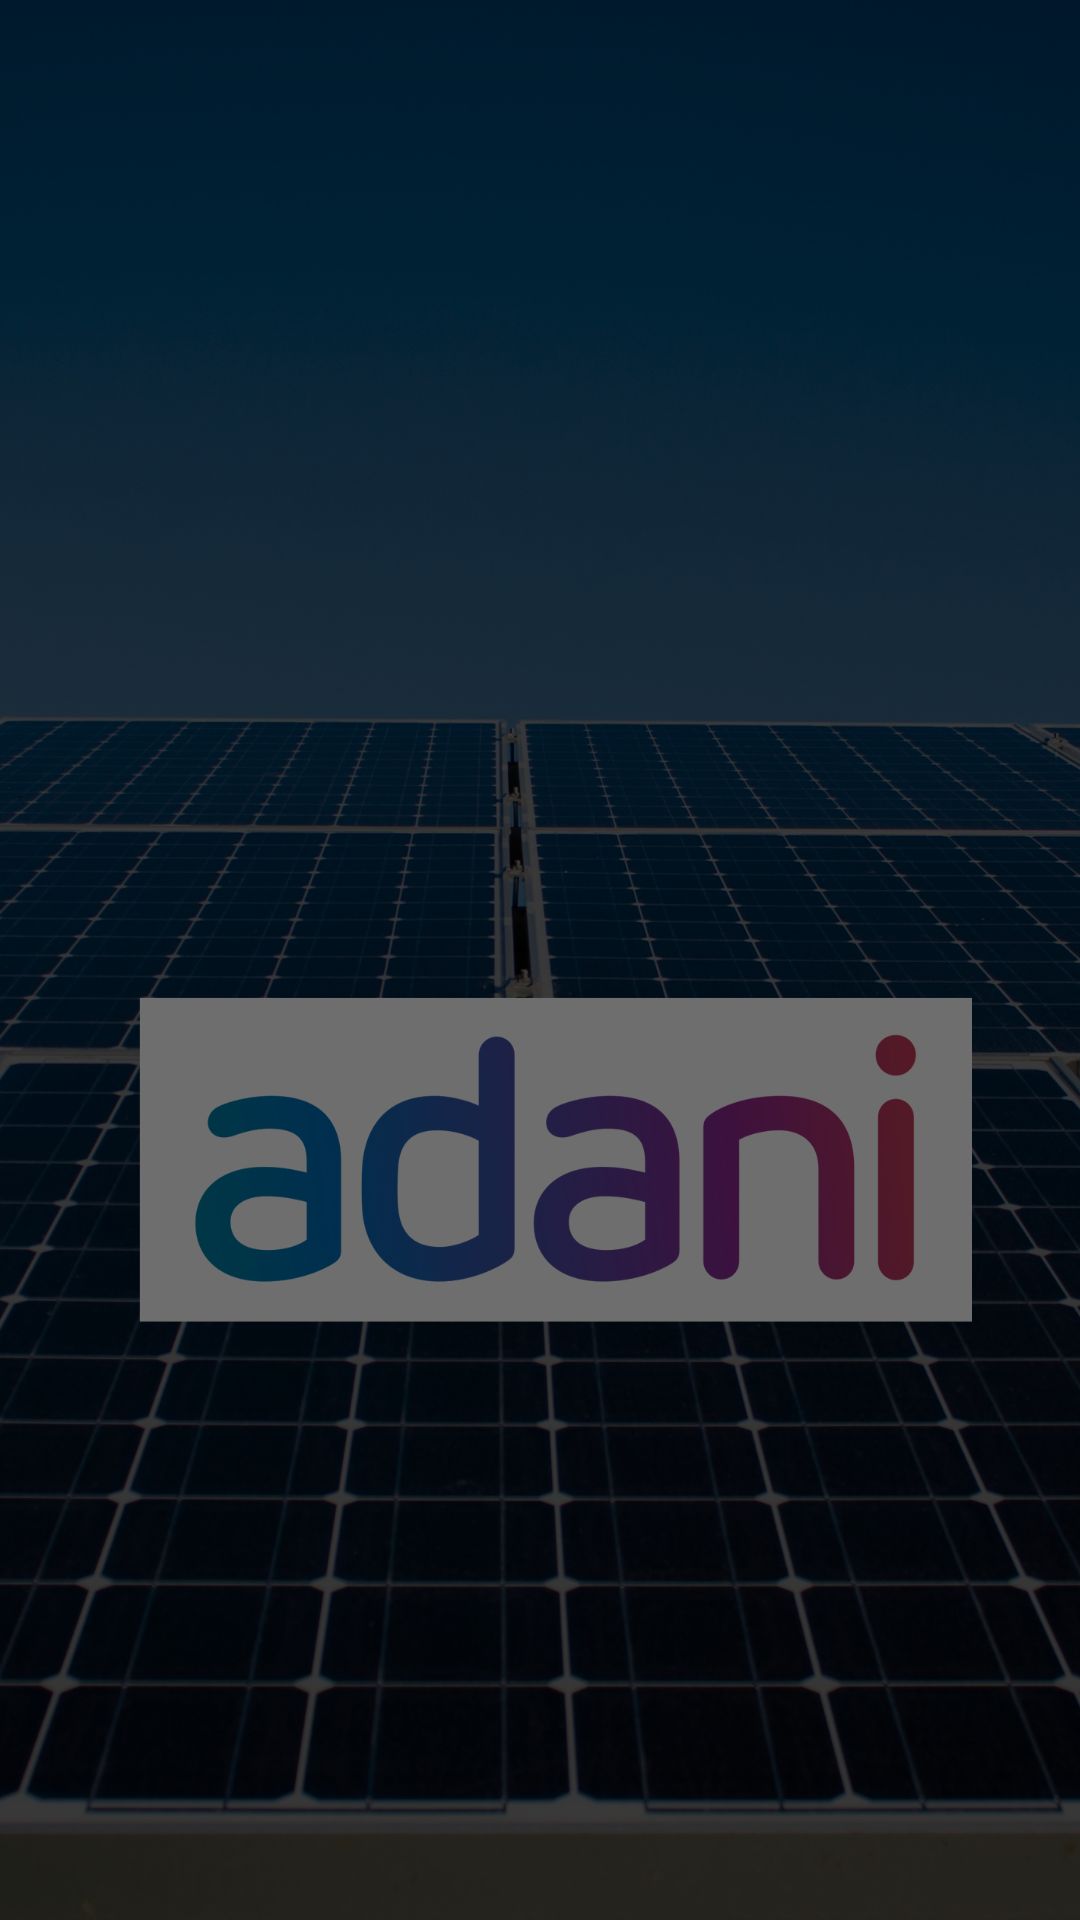 Top Adani Solar Panel Dealers in Latur - सोलर पैनल डीलर्स-अडानी, लातूर -  Best Adani Solar Panel Dealers - Justdial